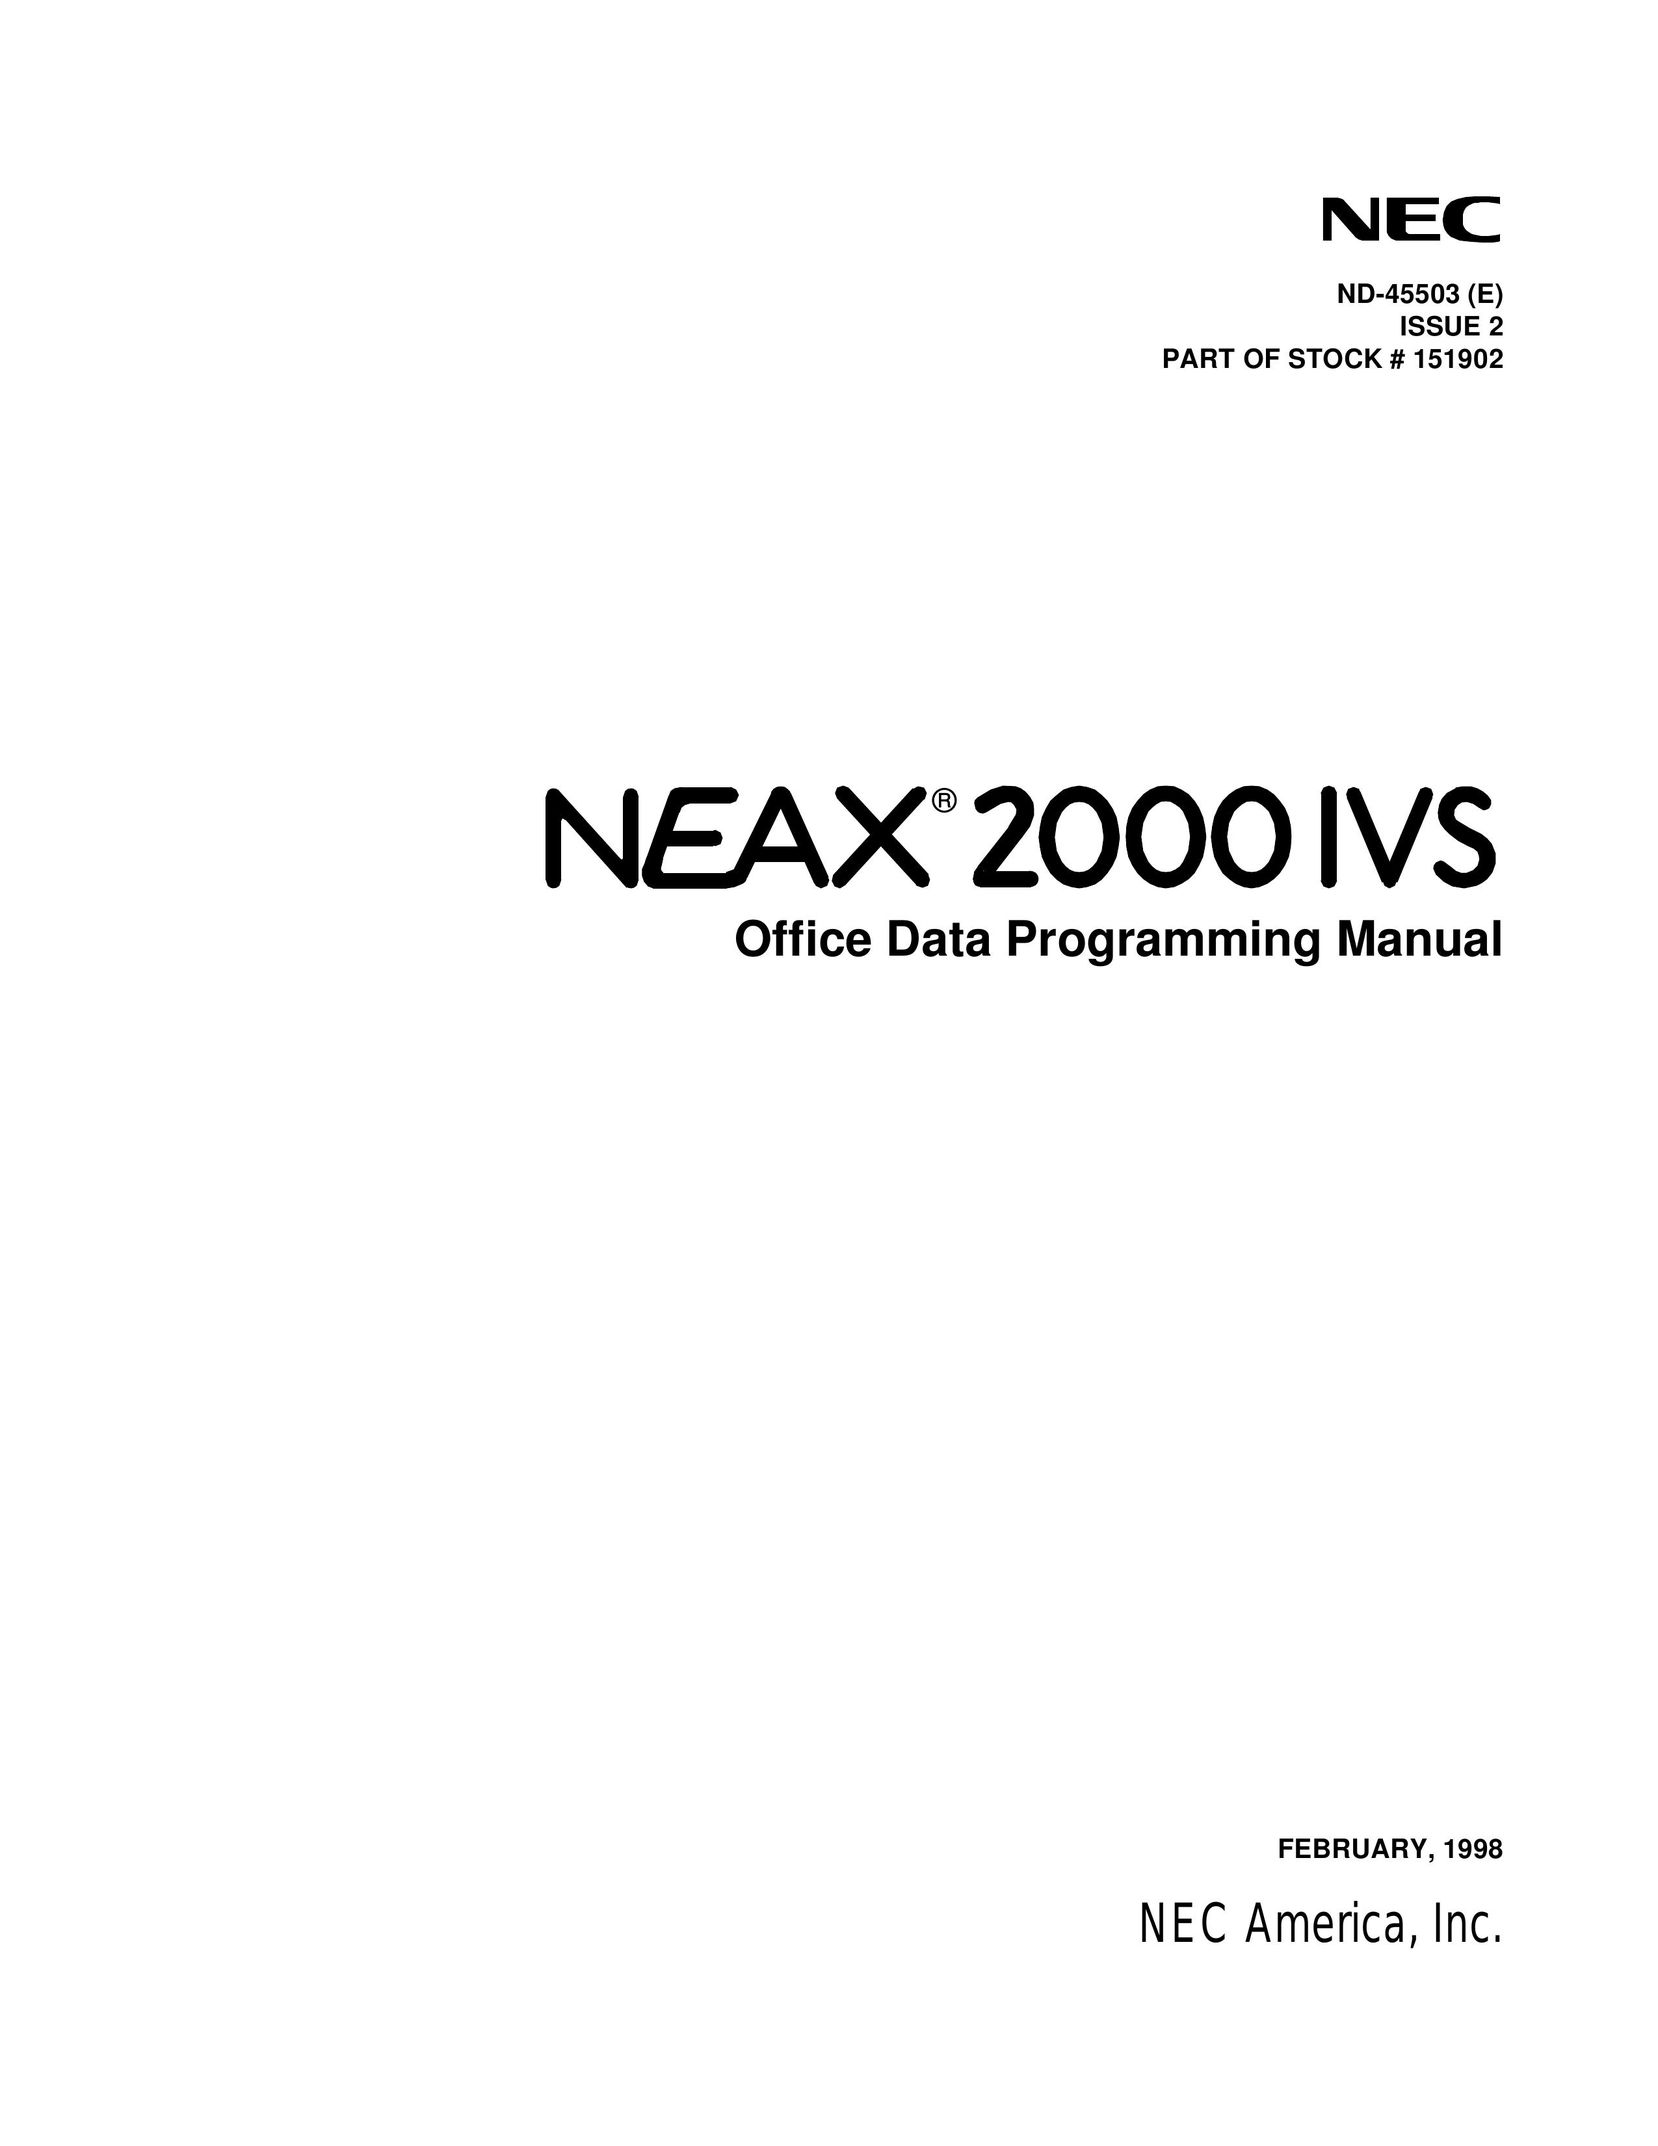 NEC NEAX 2000 IVS Answering Machine User Manual